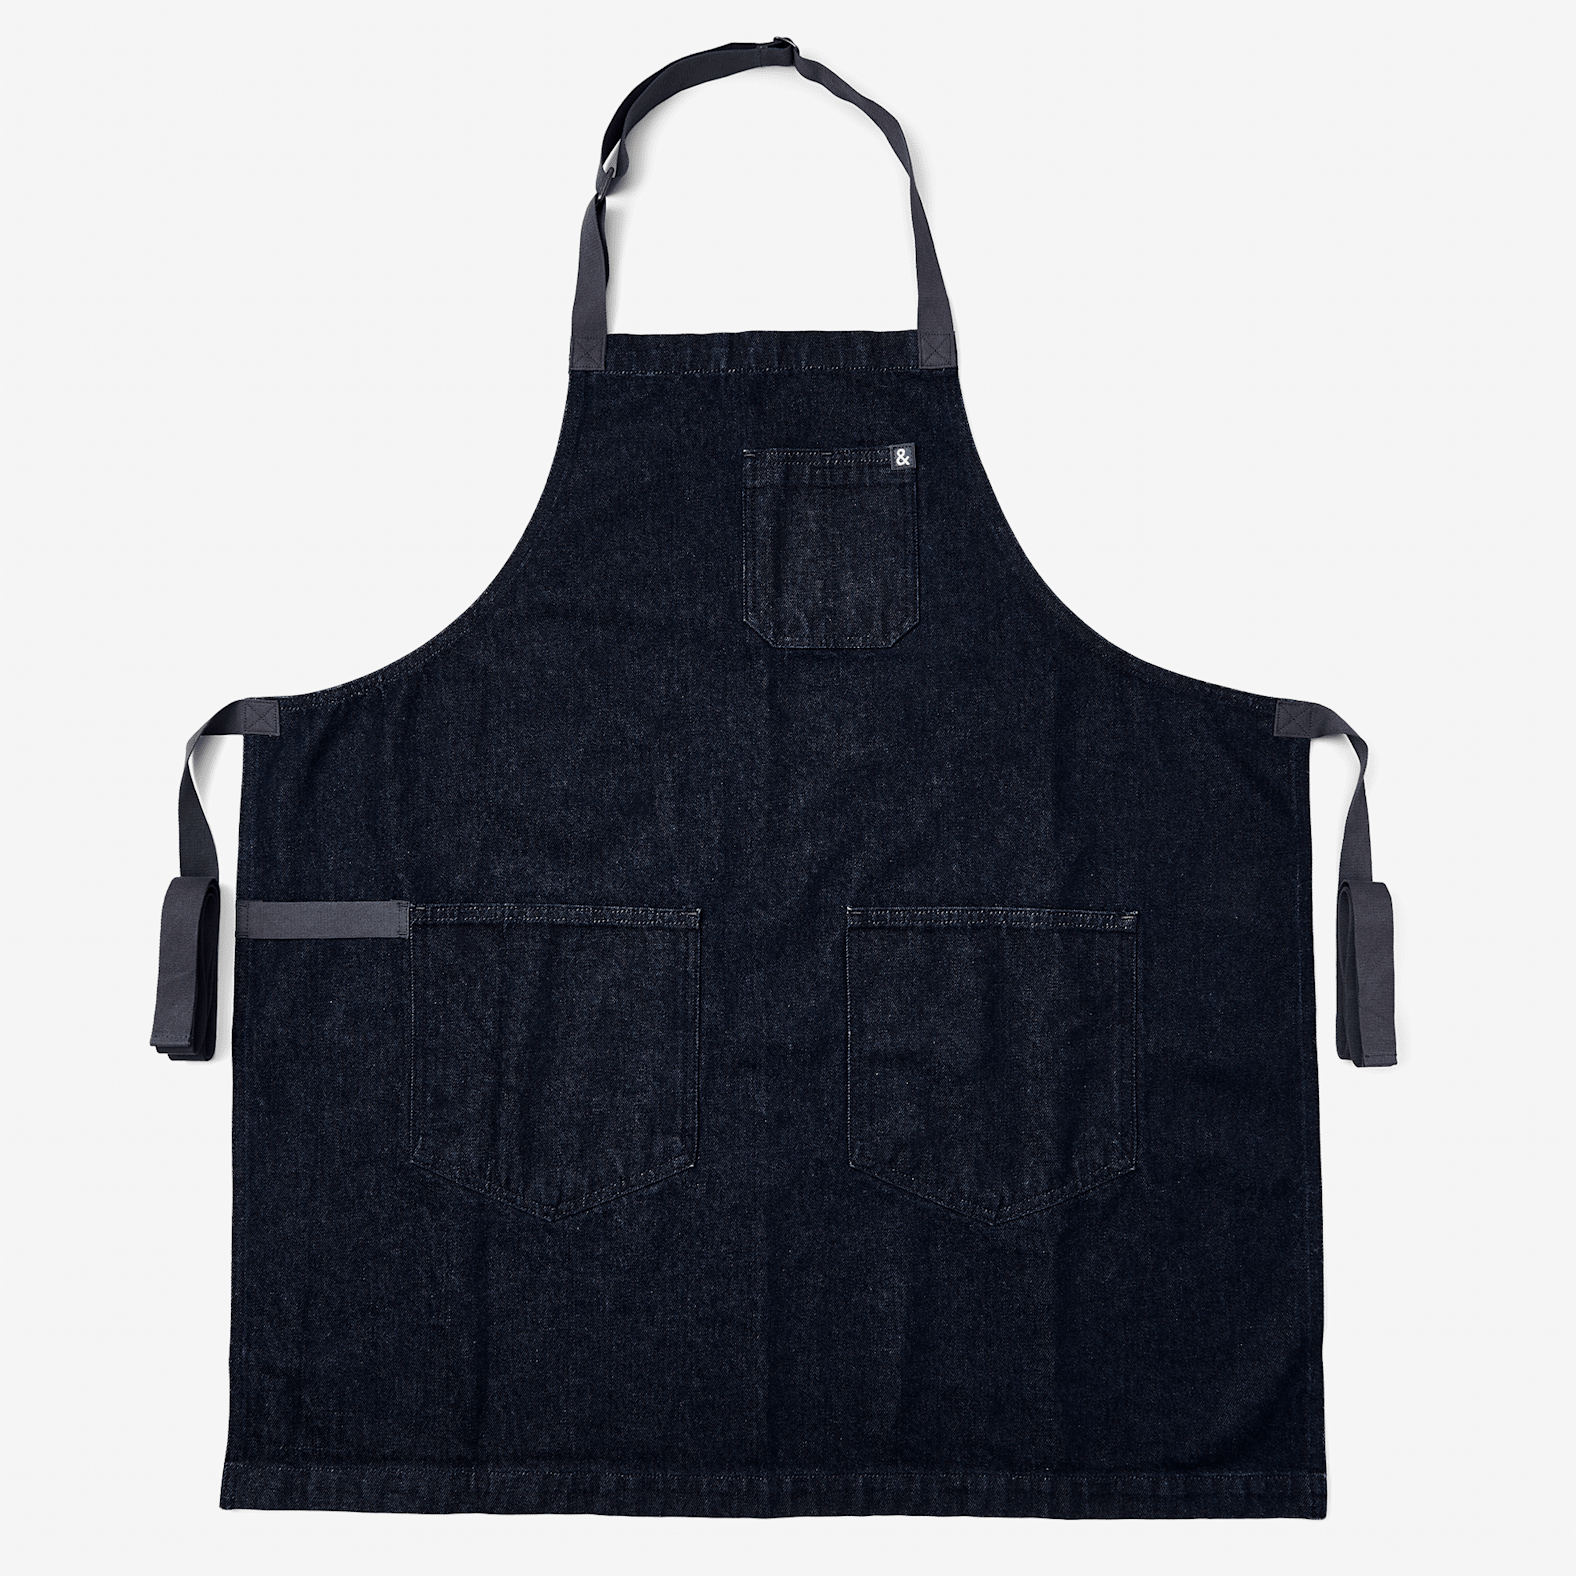 break coffee / bar  vest apron black